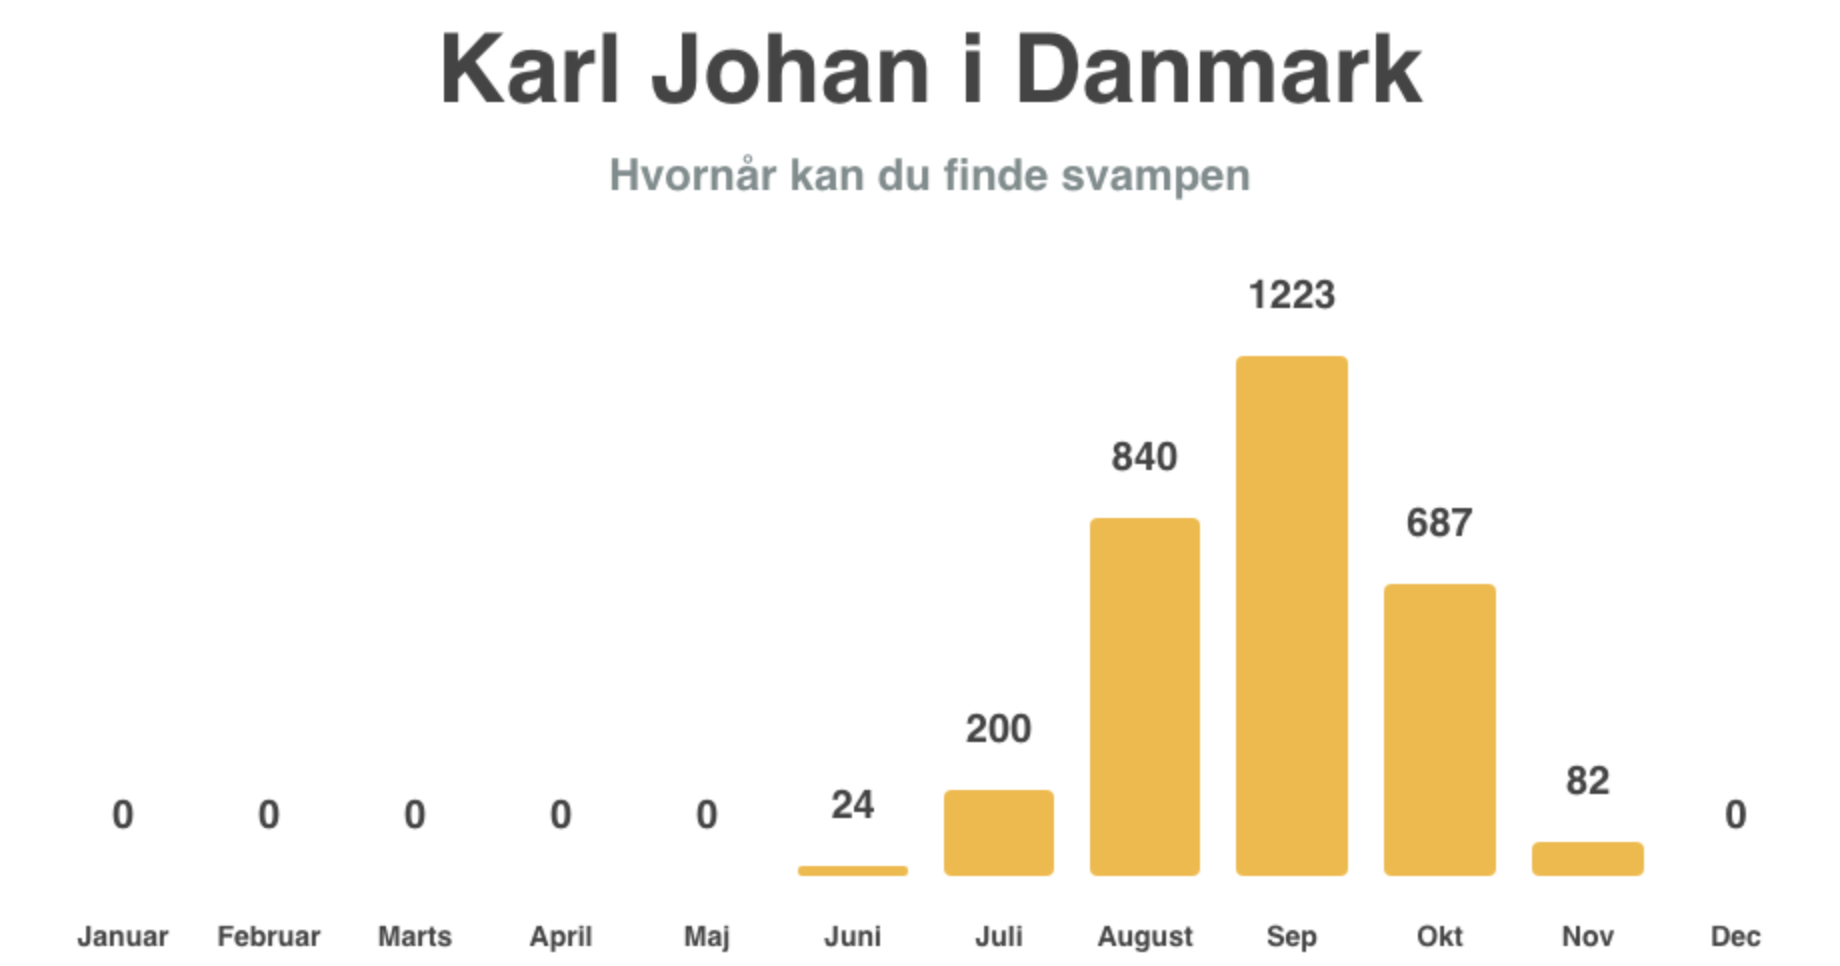 Karl Johan svampens sæson